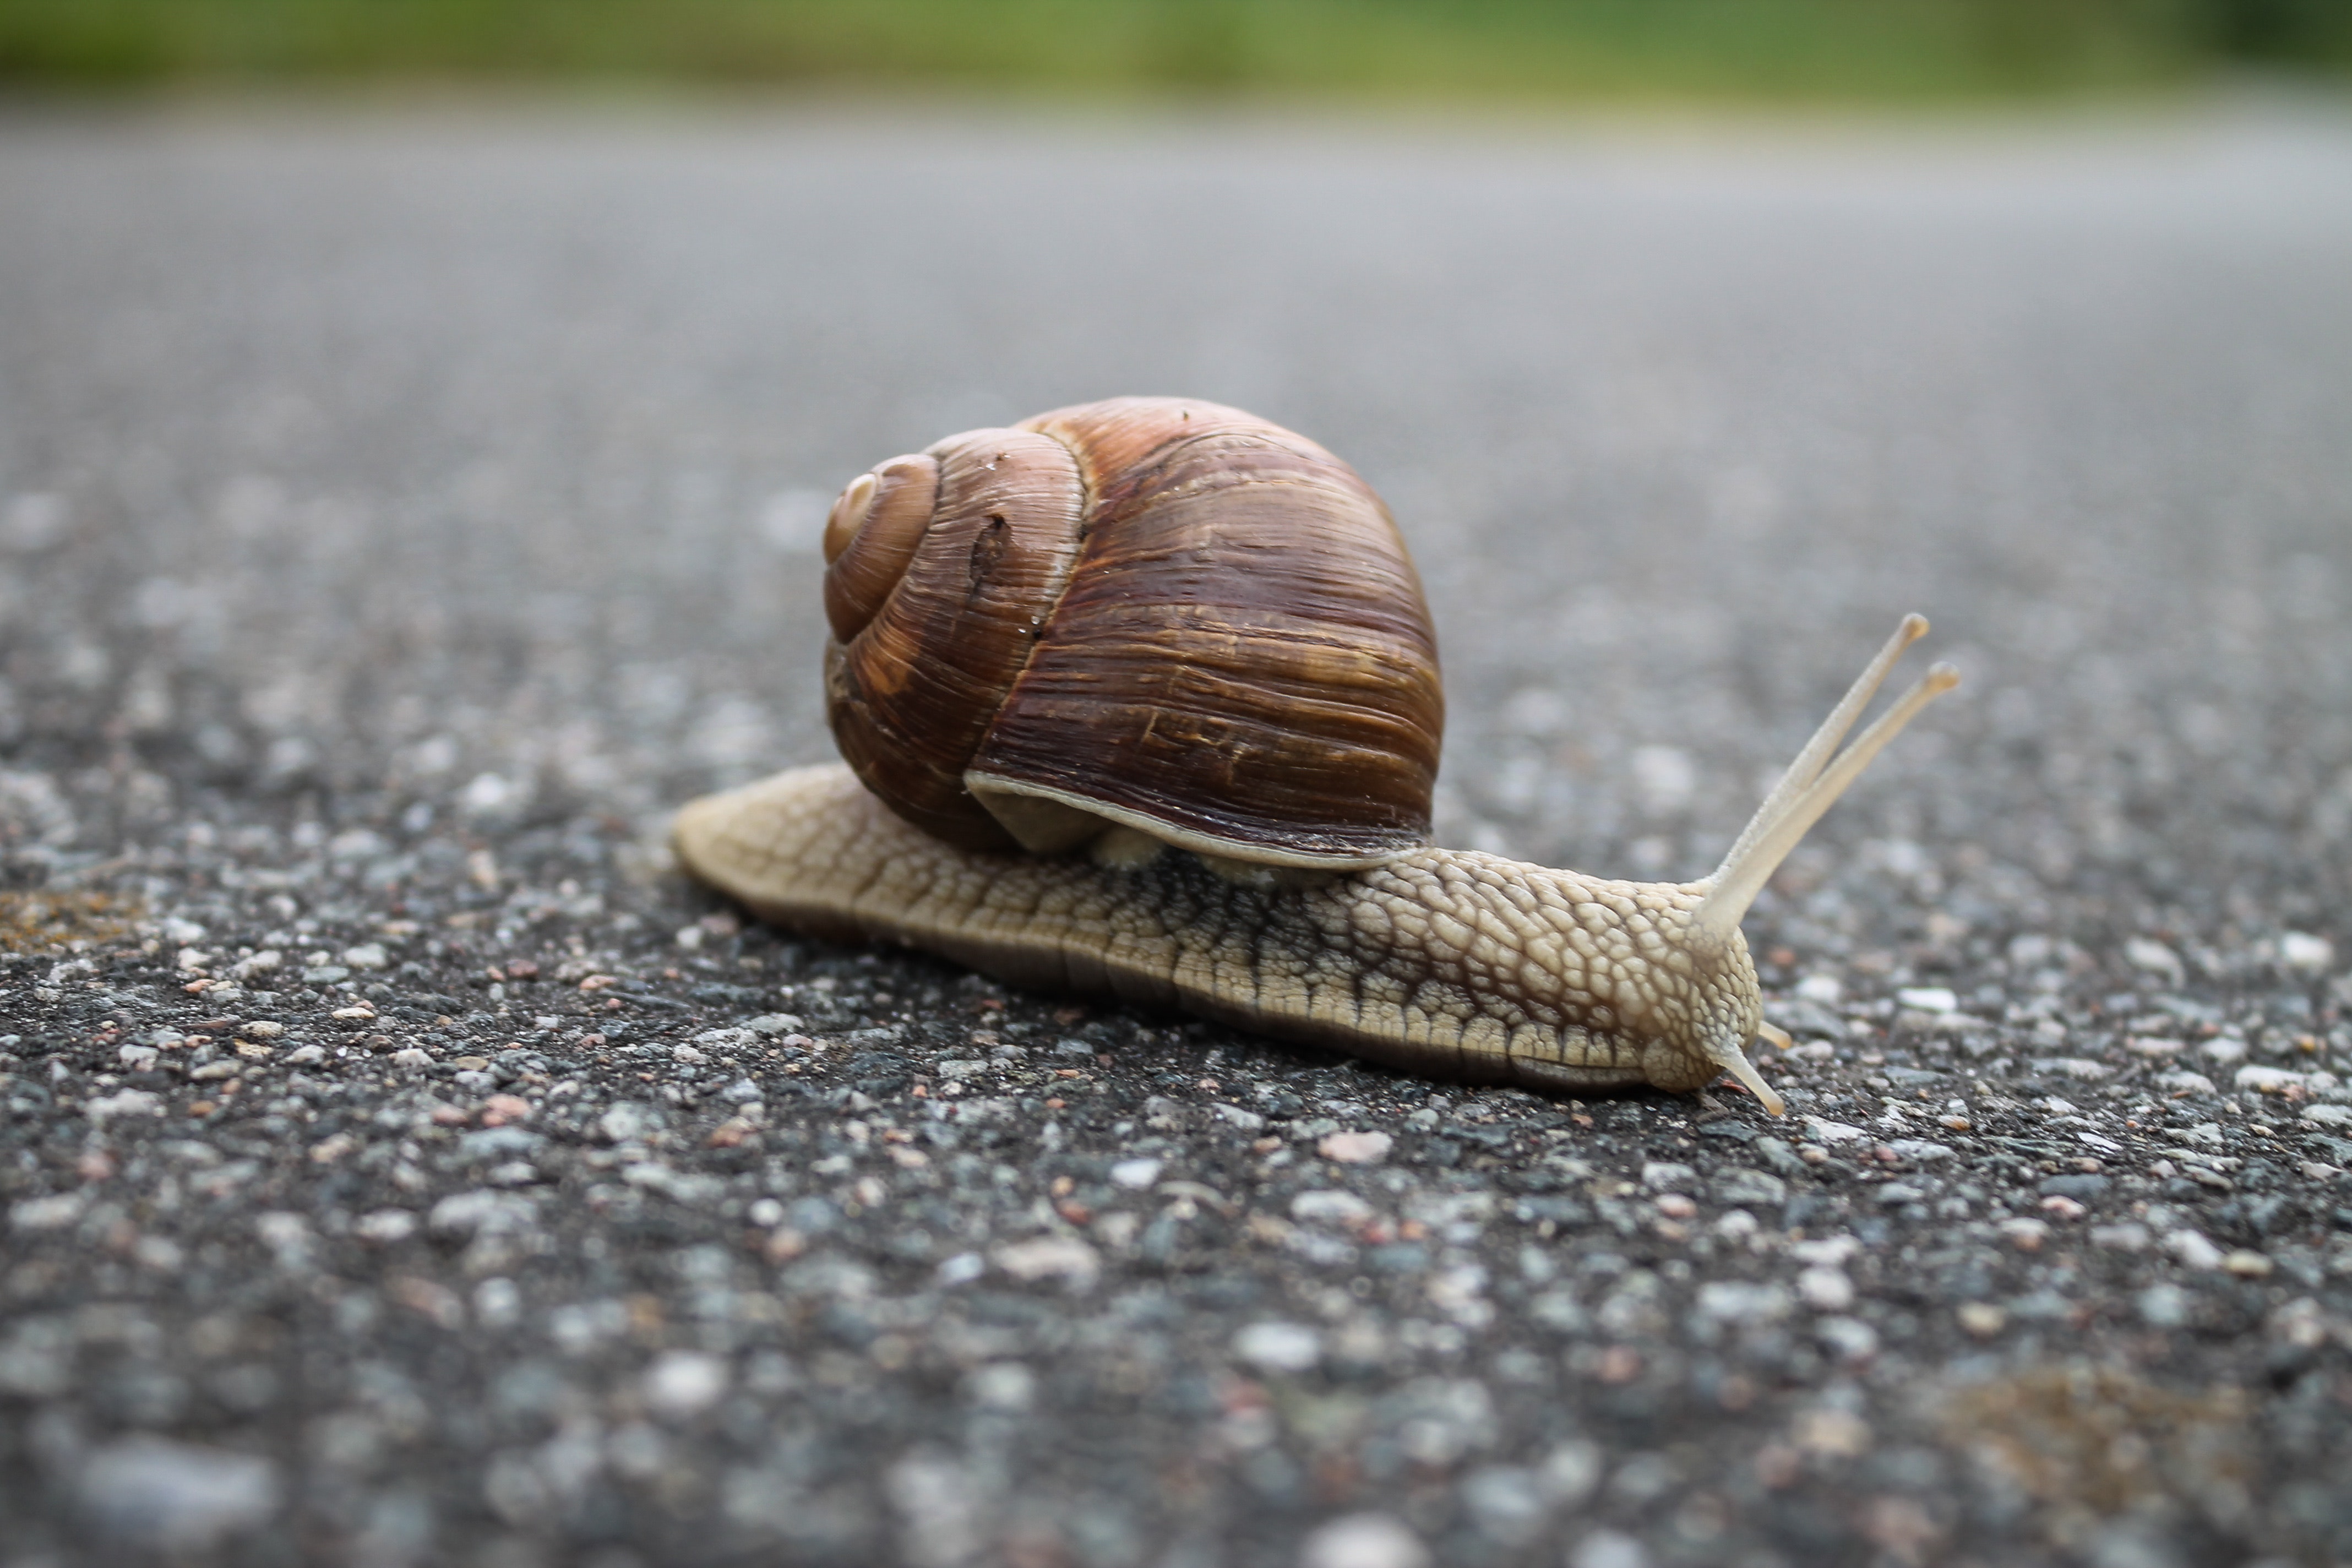 A snail crawling across a road